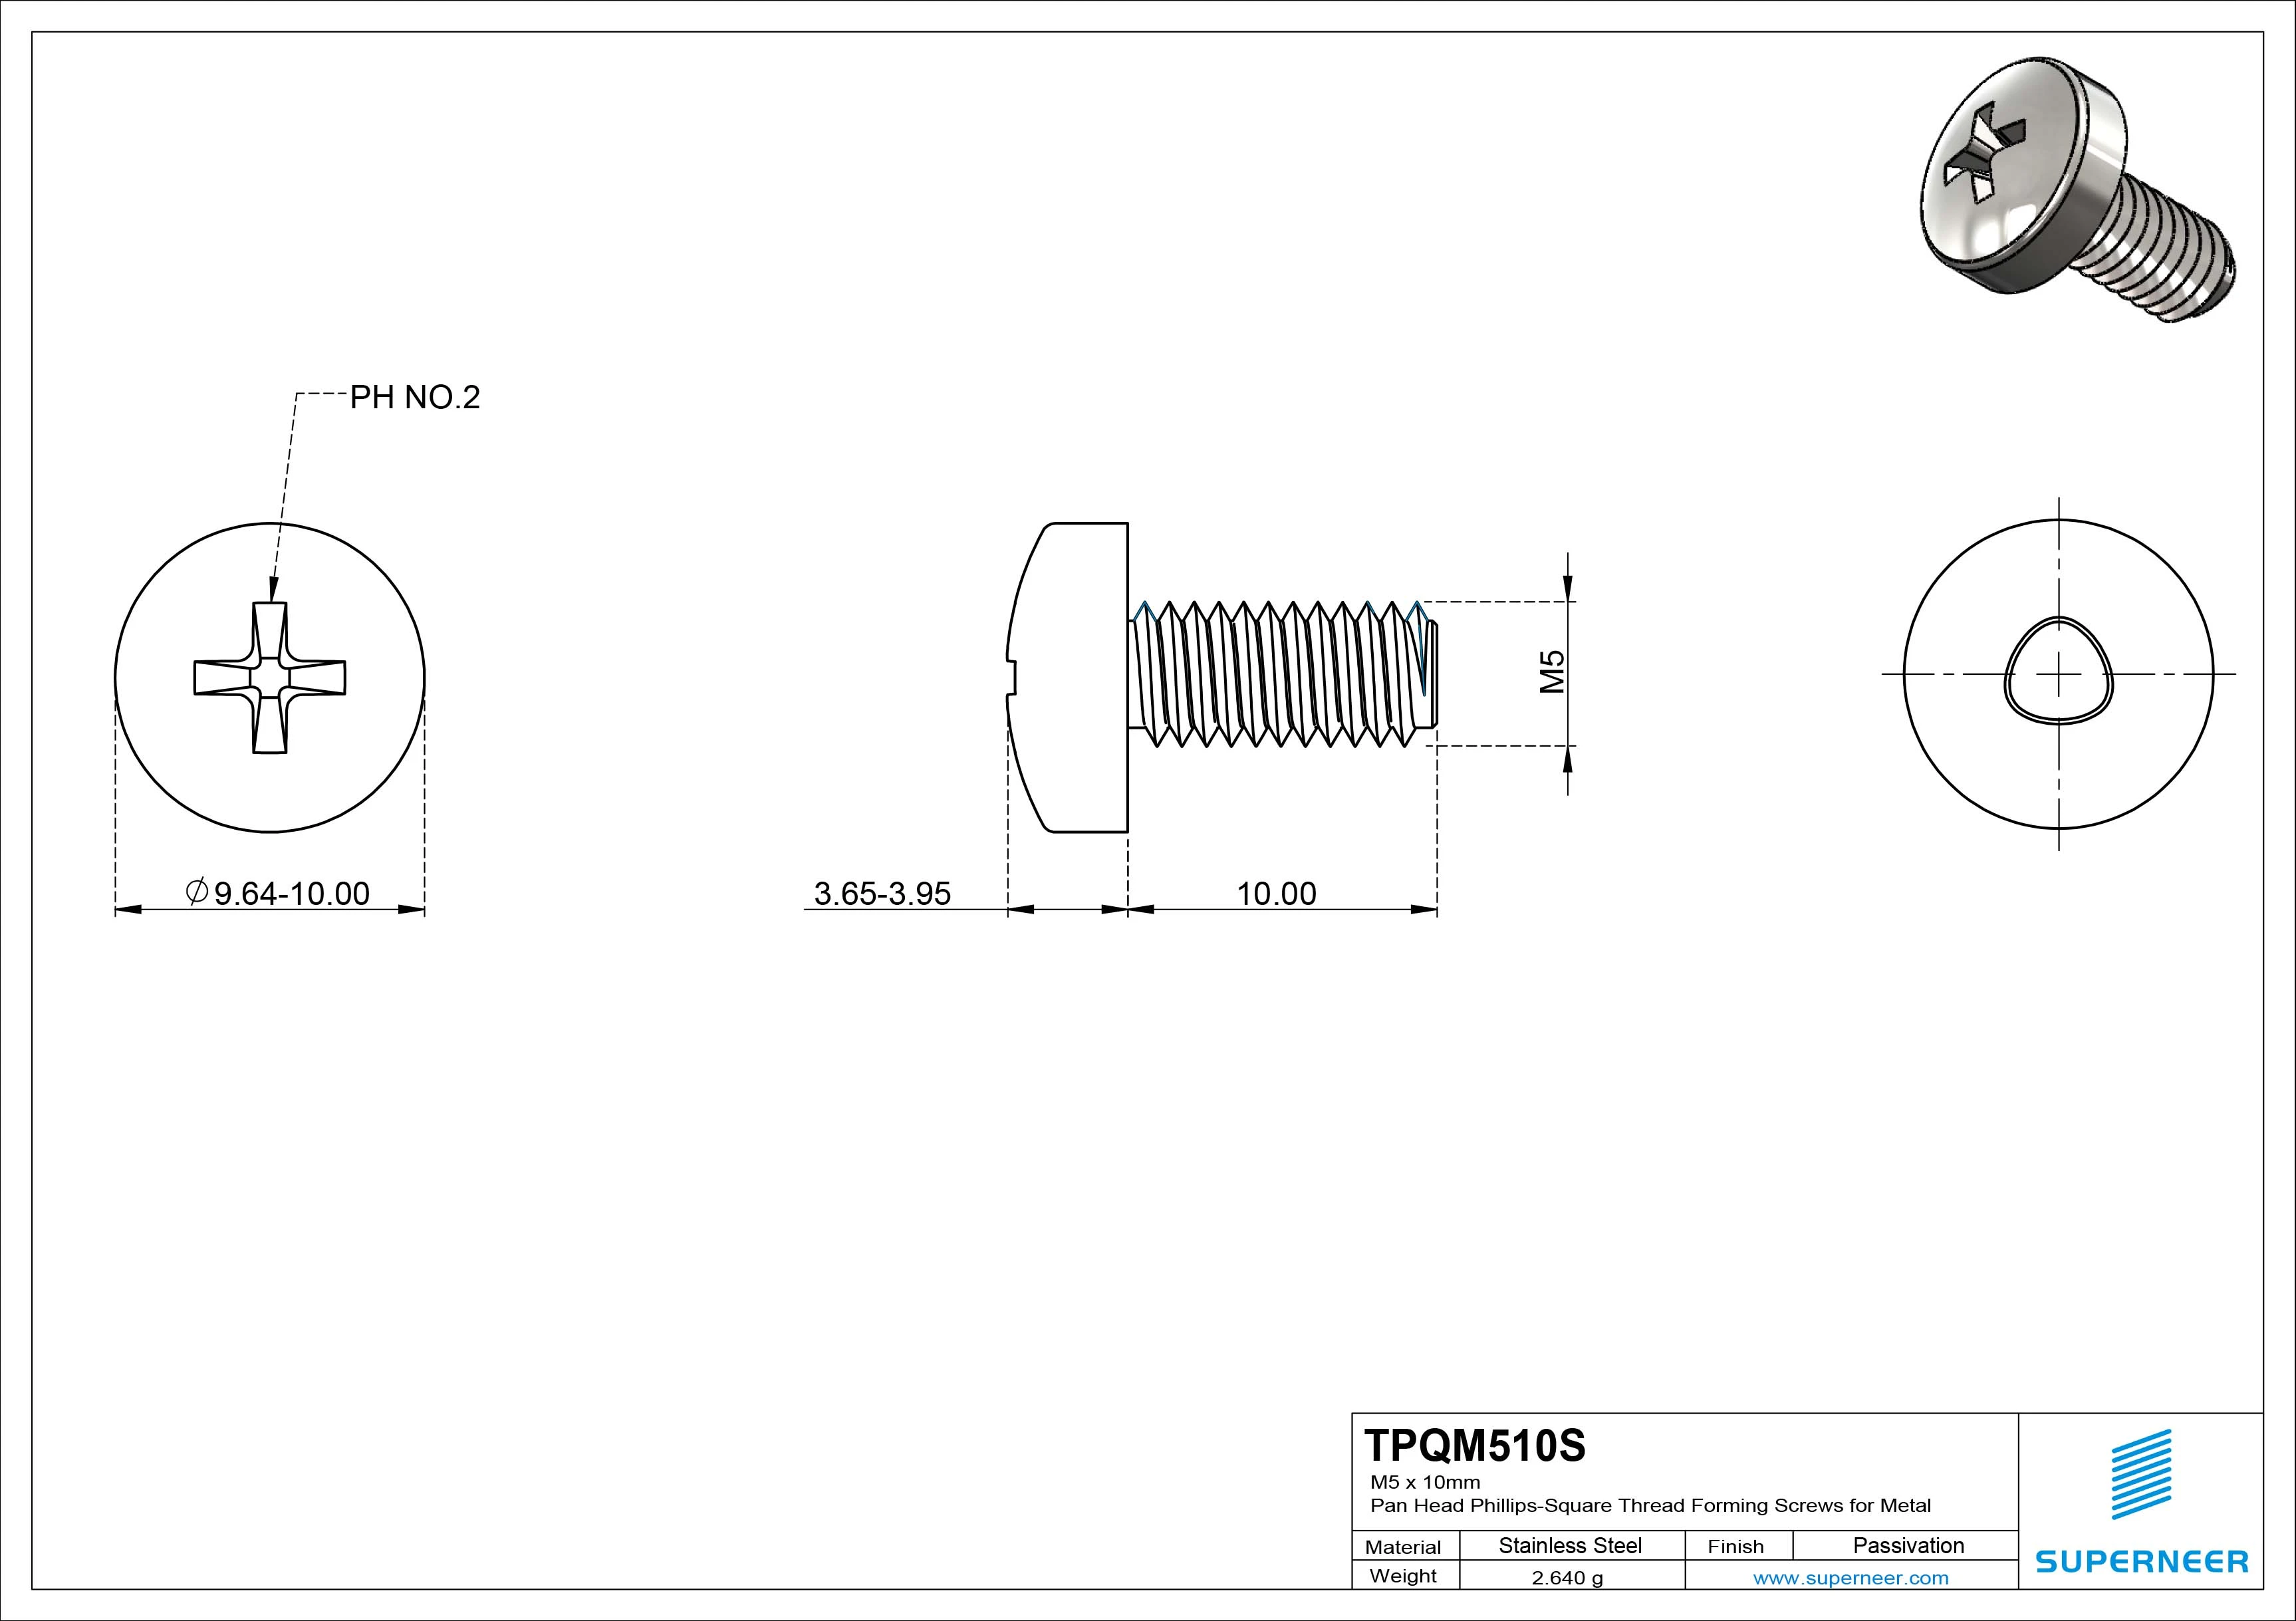 M5 × 10mm Pan Head Phillips-Square Thread Forming Screws for Metal SUS304 Stainless Steel Inox